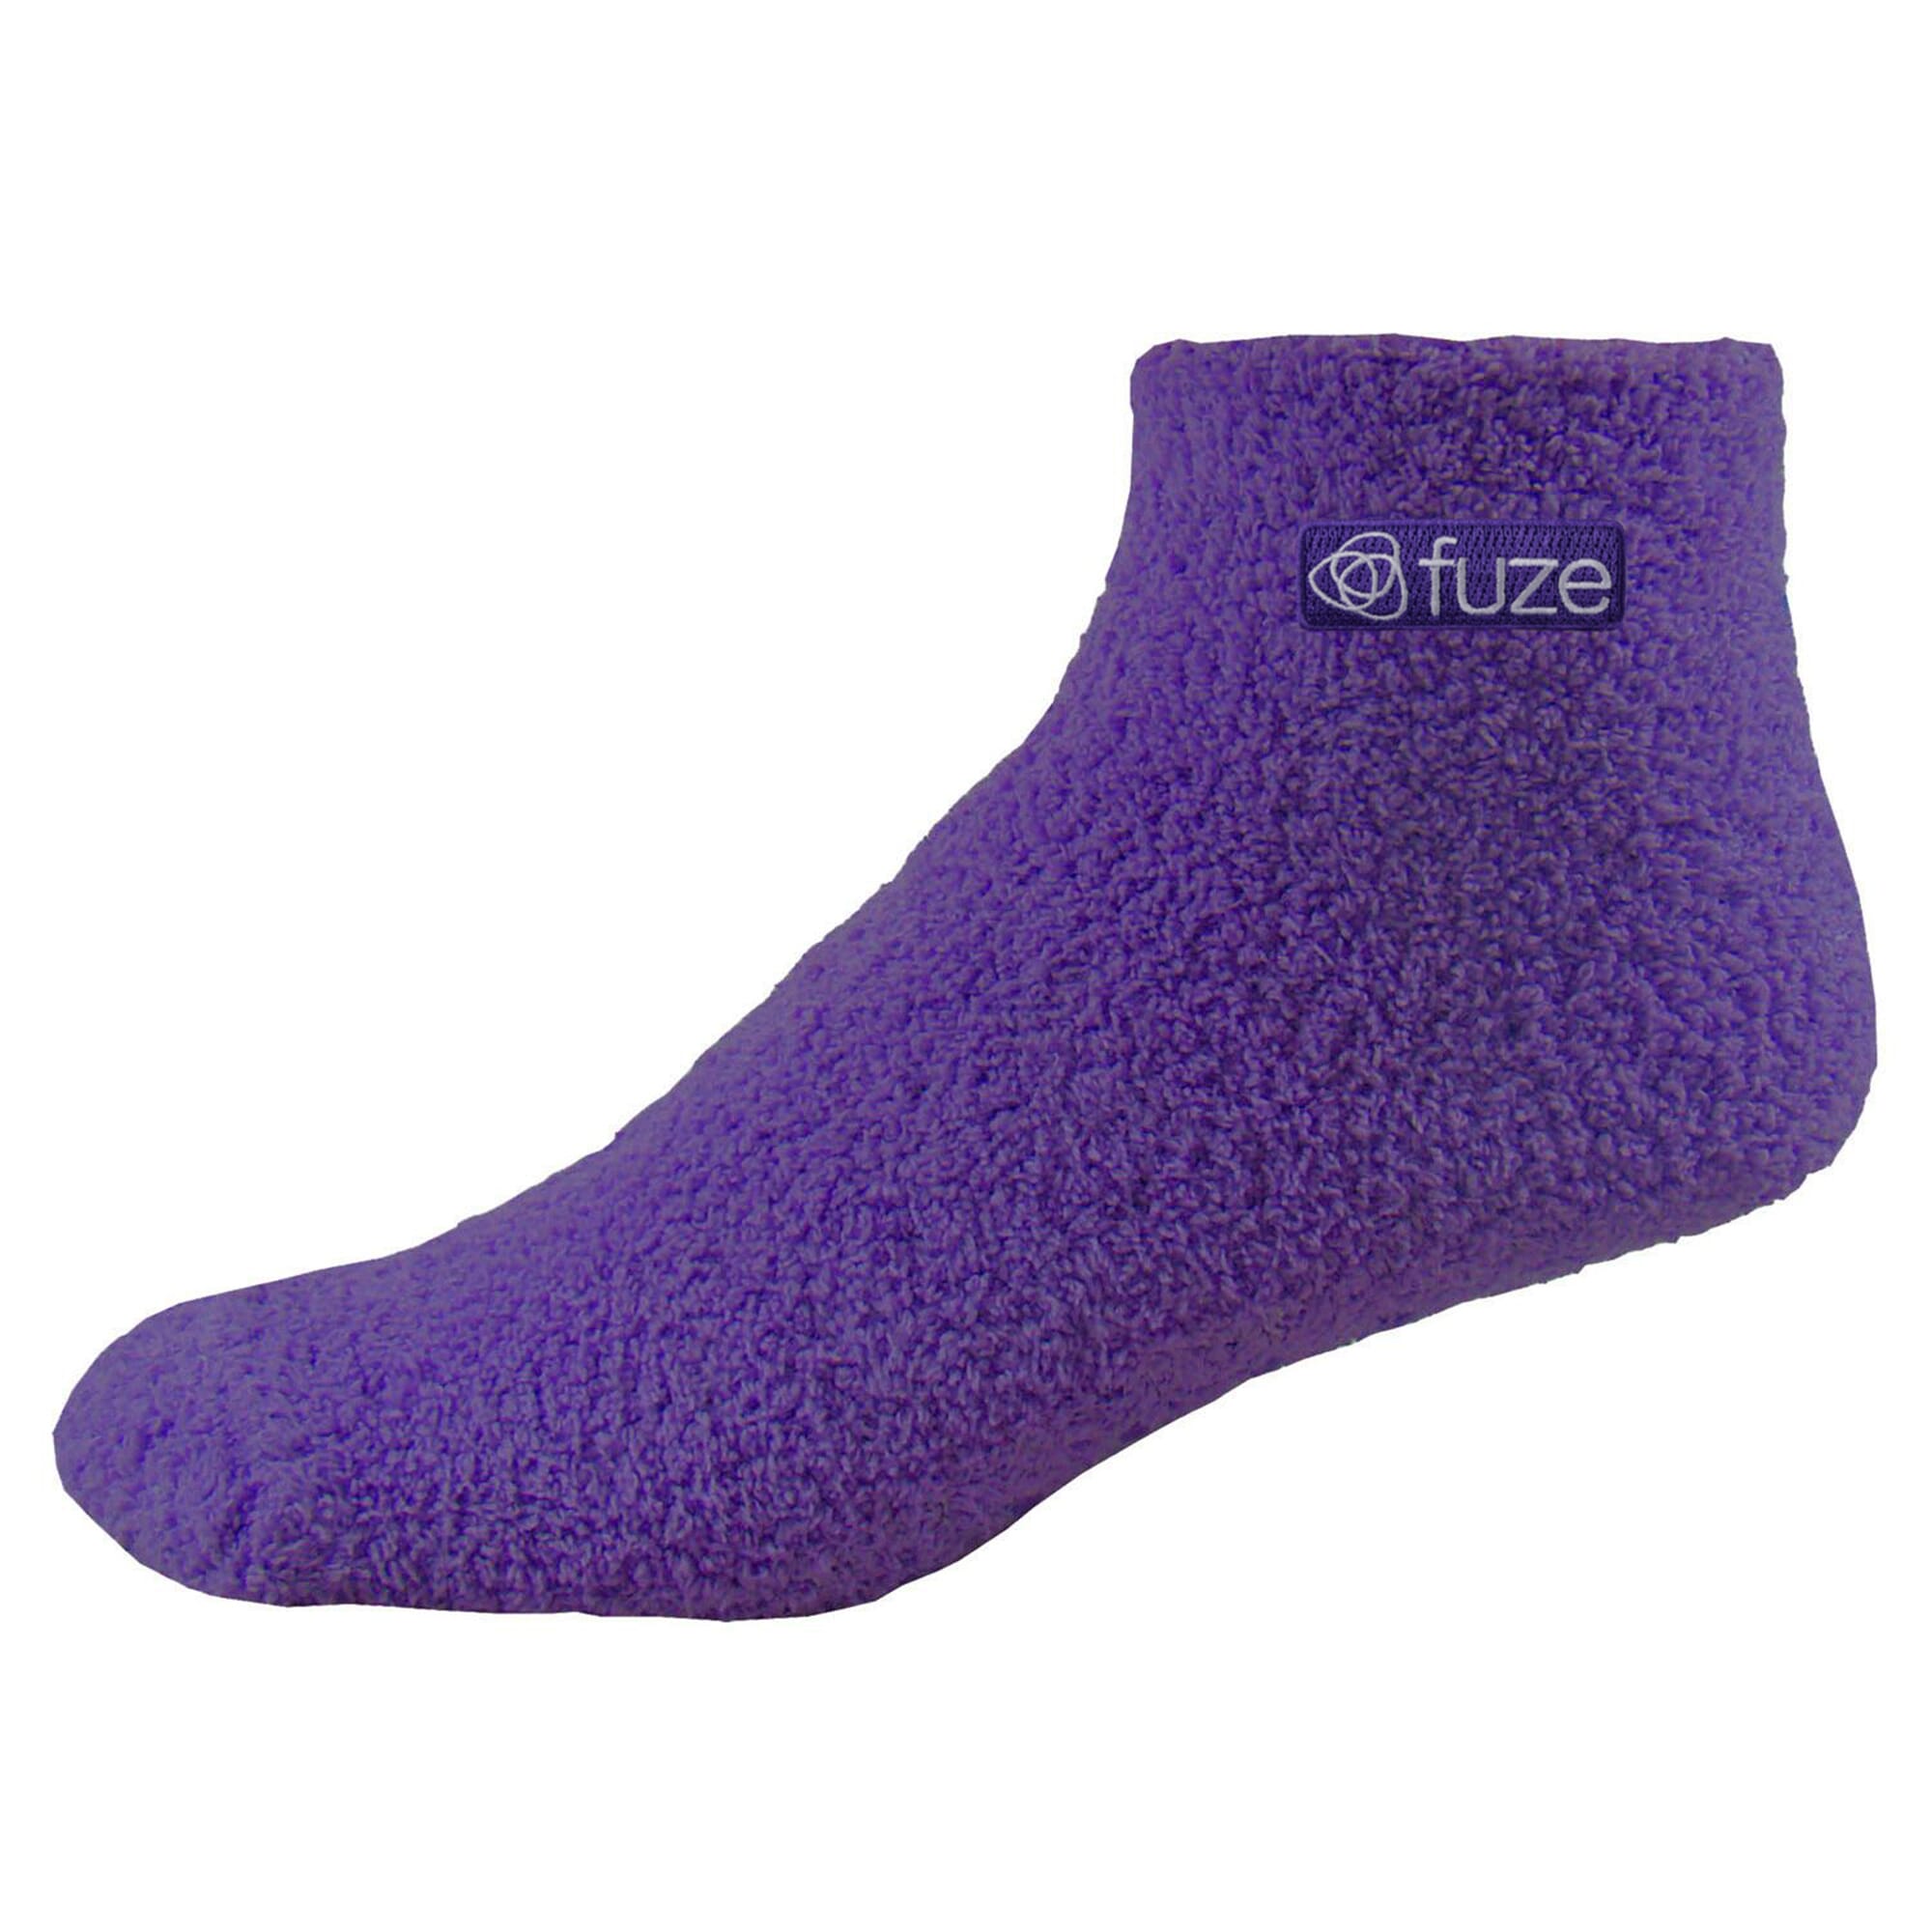 fuzzy socks with non-slip grips